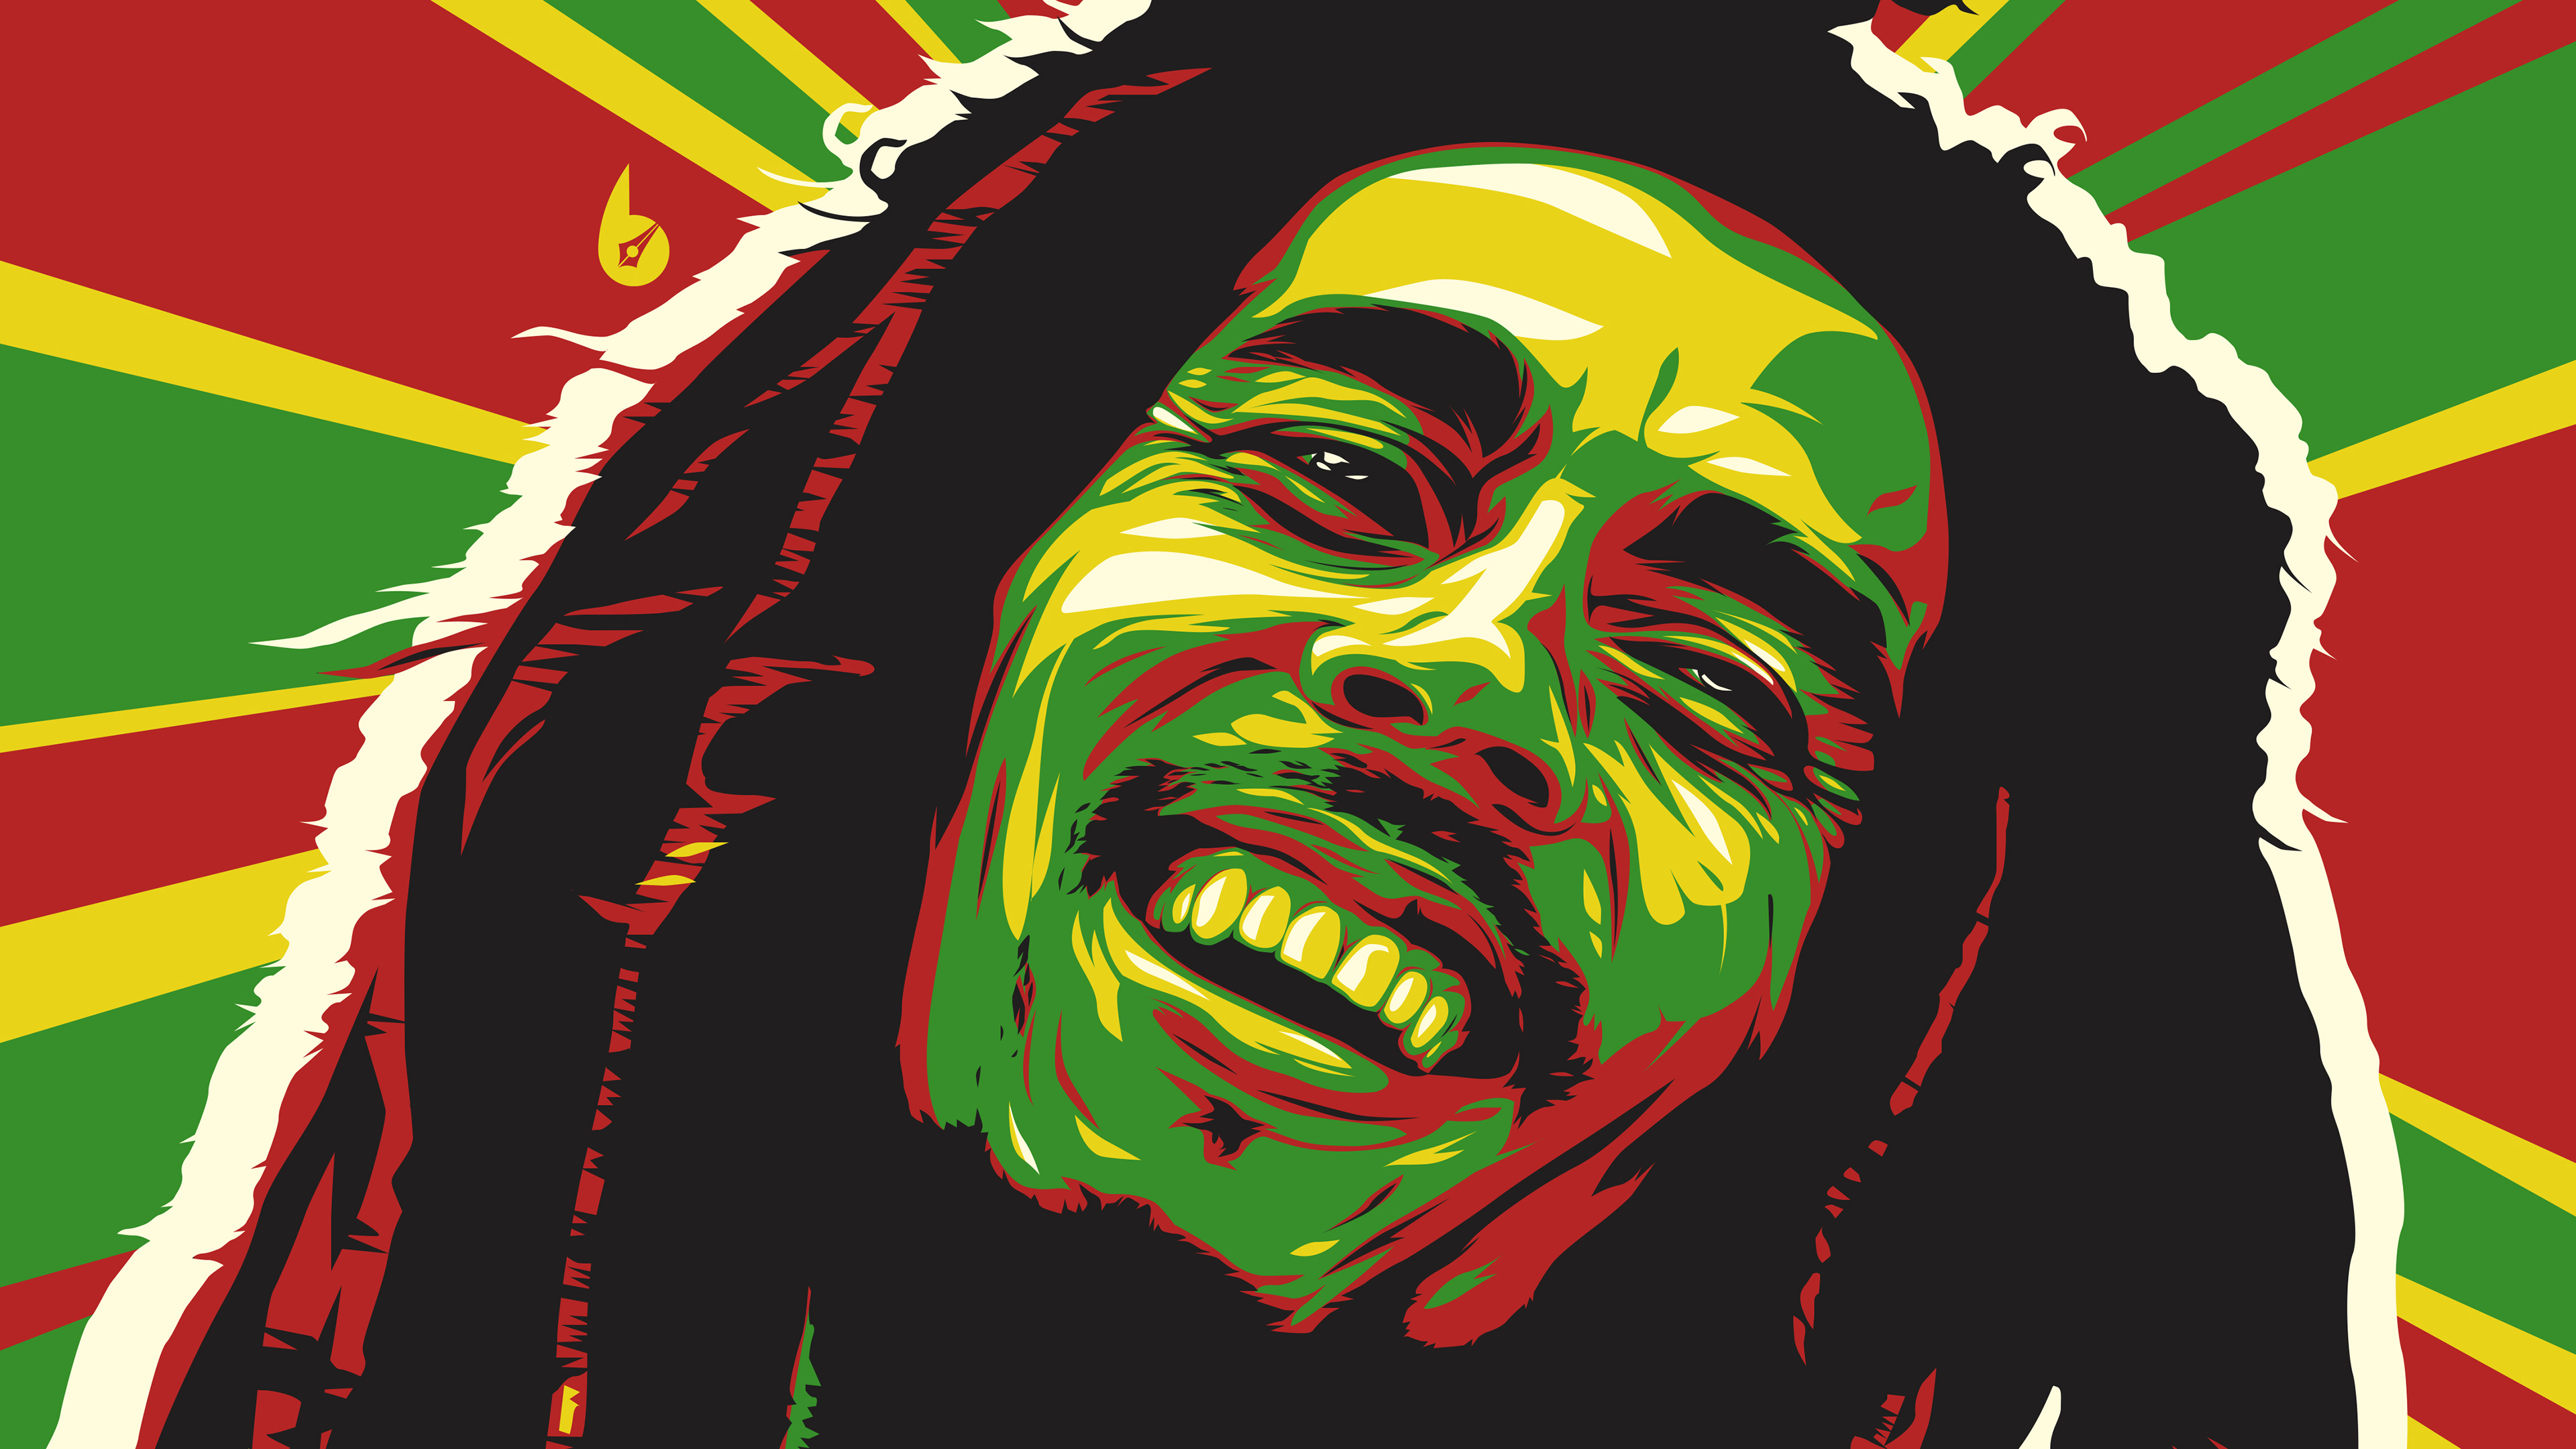 4k Bob Marley Desktop Wallpapers - Wallpaper Cave